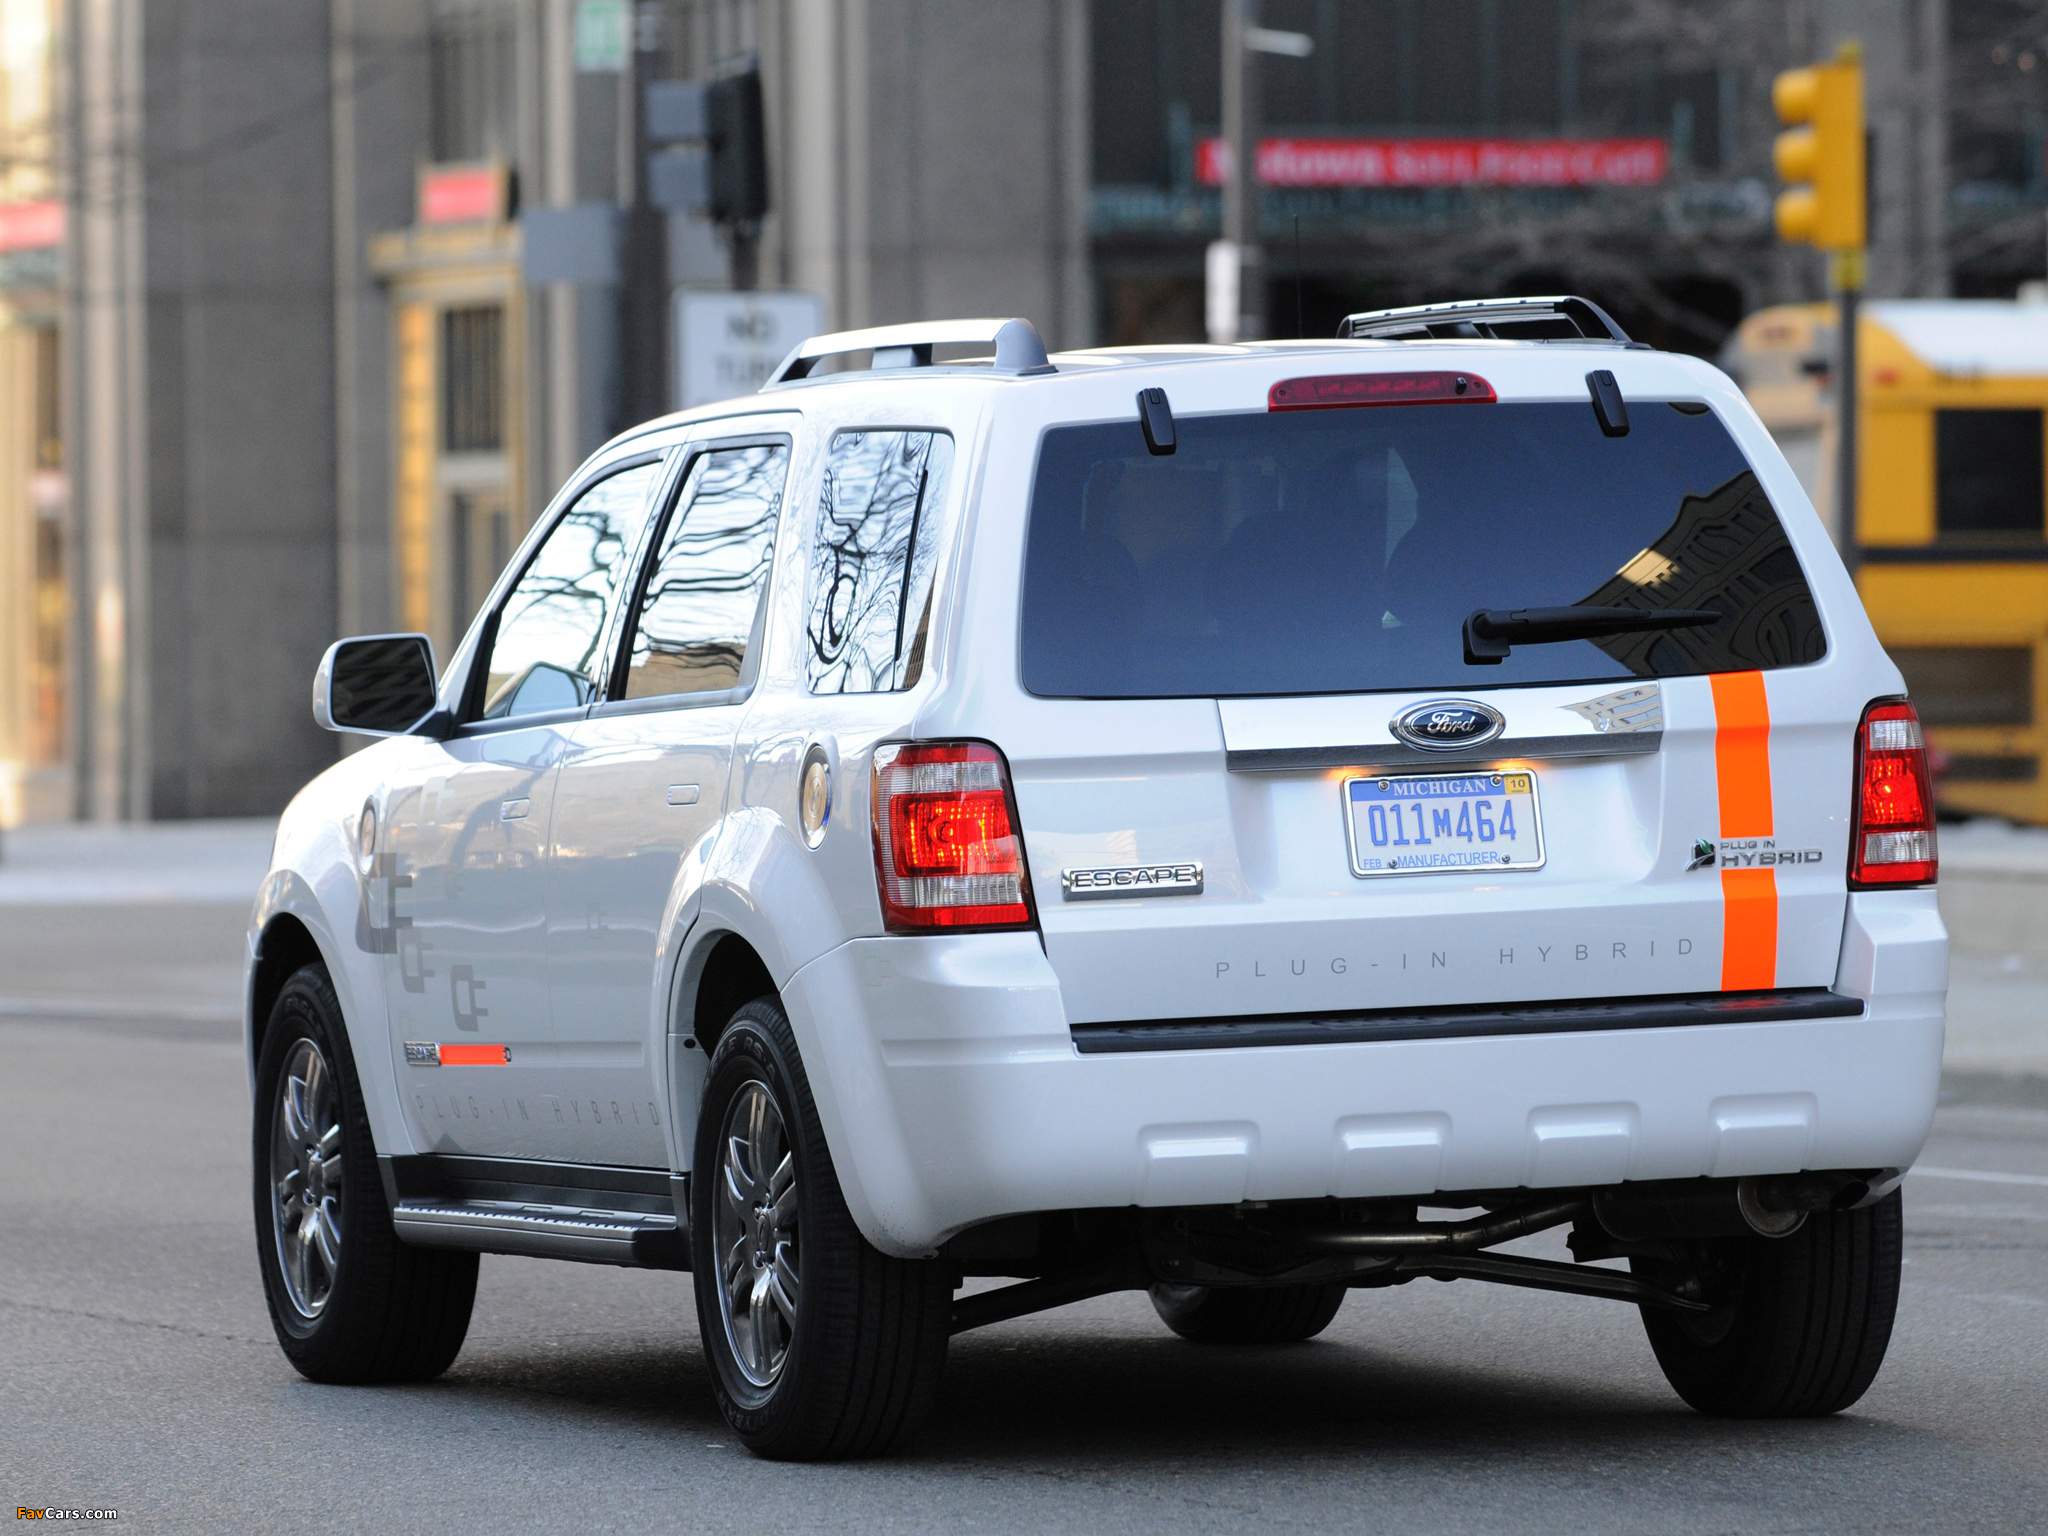 2008 Ford Escape Hybrid: 500K Miles, Still In Patrol Service